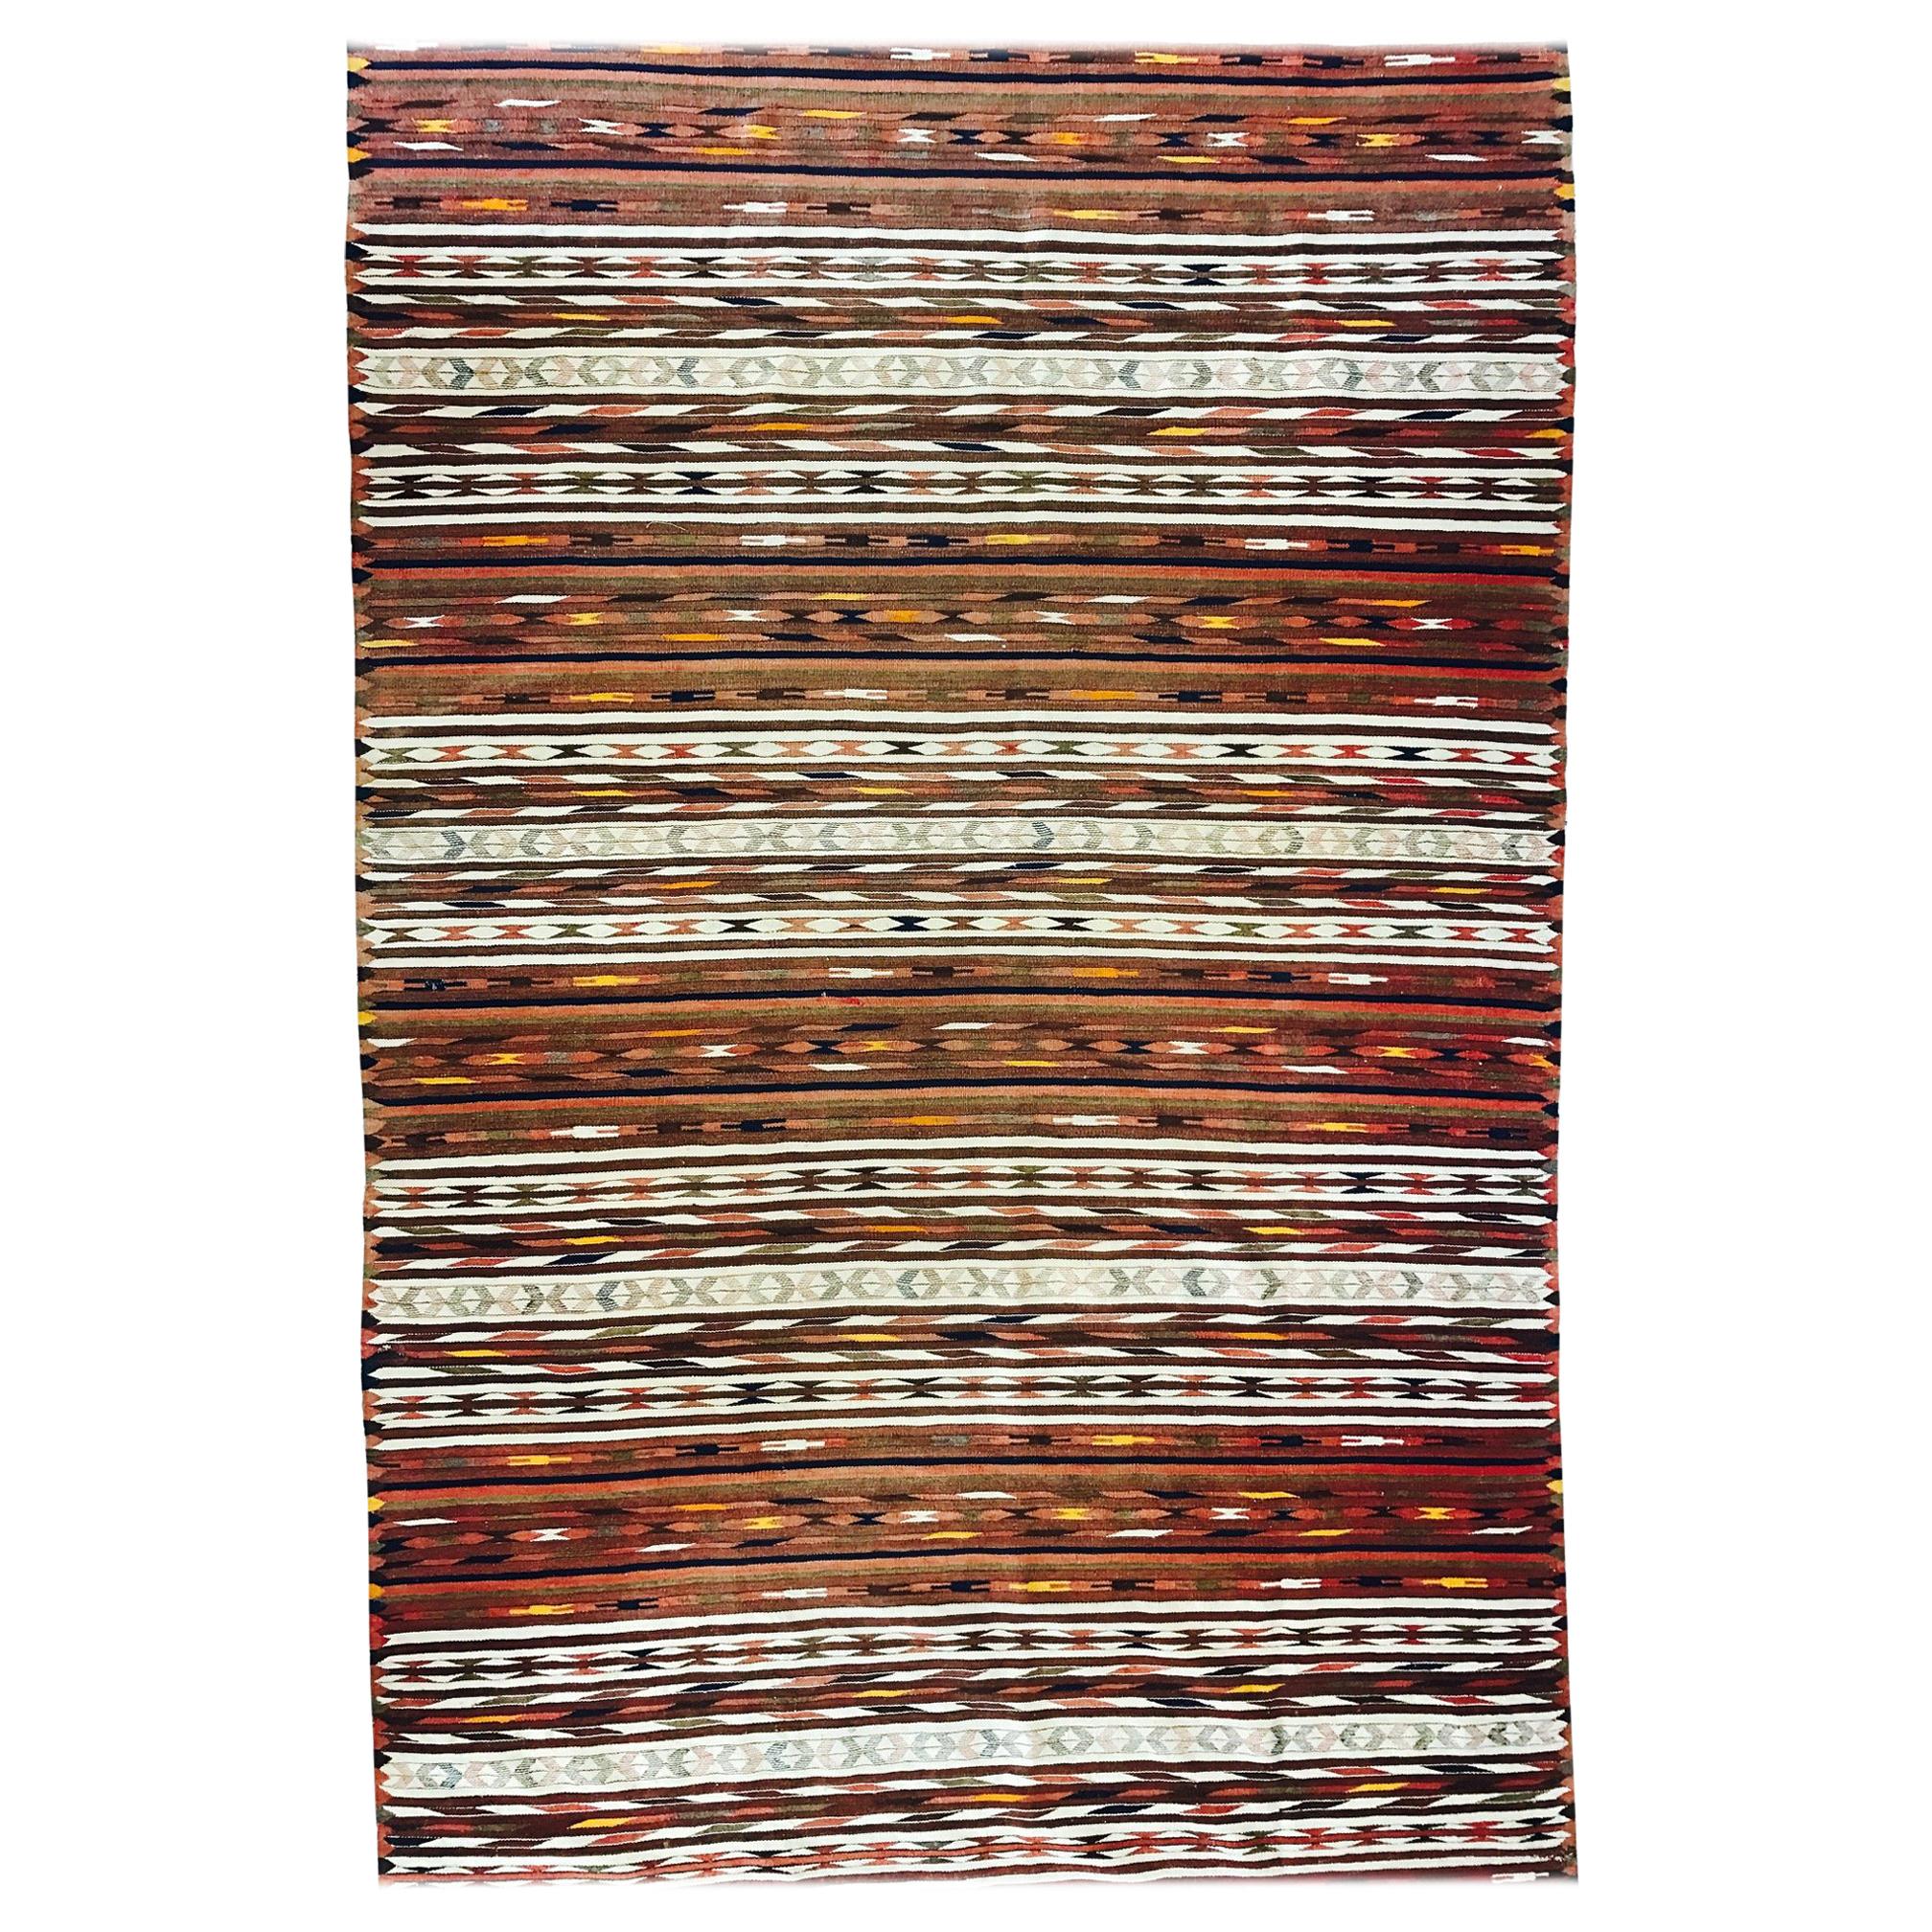 Antique Flat Woven Turkish Kilim Rug